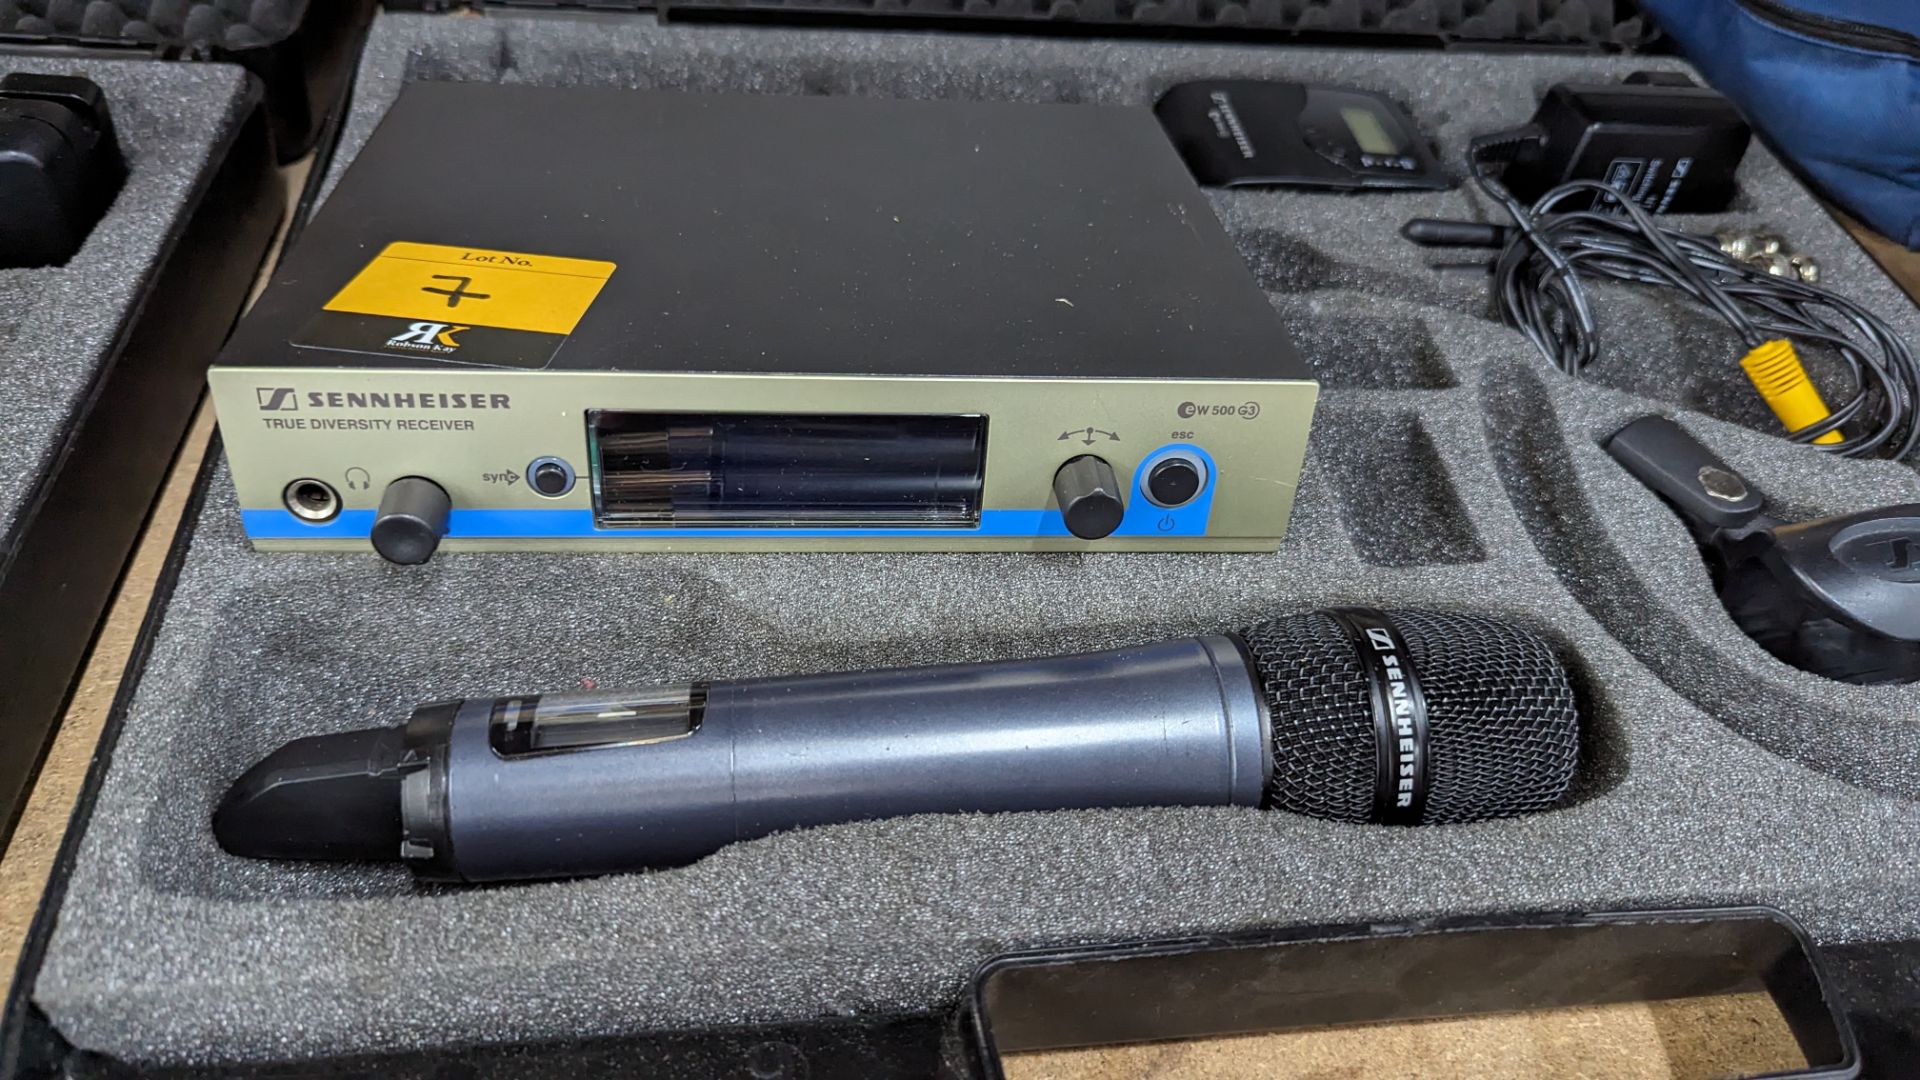 Sennheiser Evolution wireless microphone kit comprising 1 off Sennheiser model EW500 G3 true diversi - Image 3 of 12